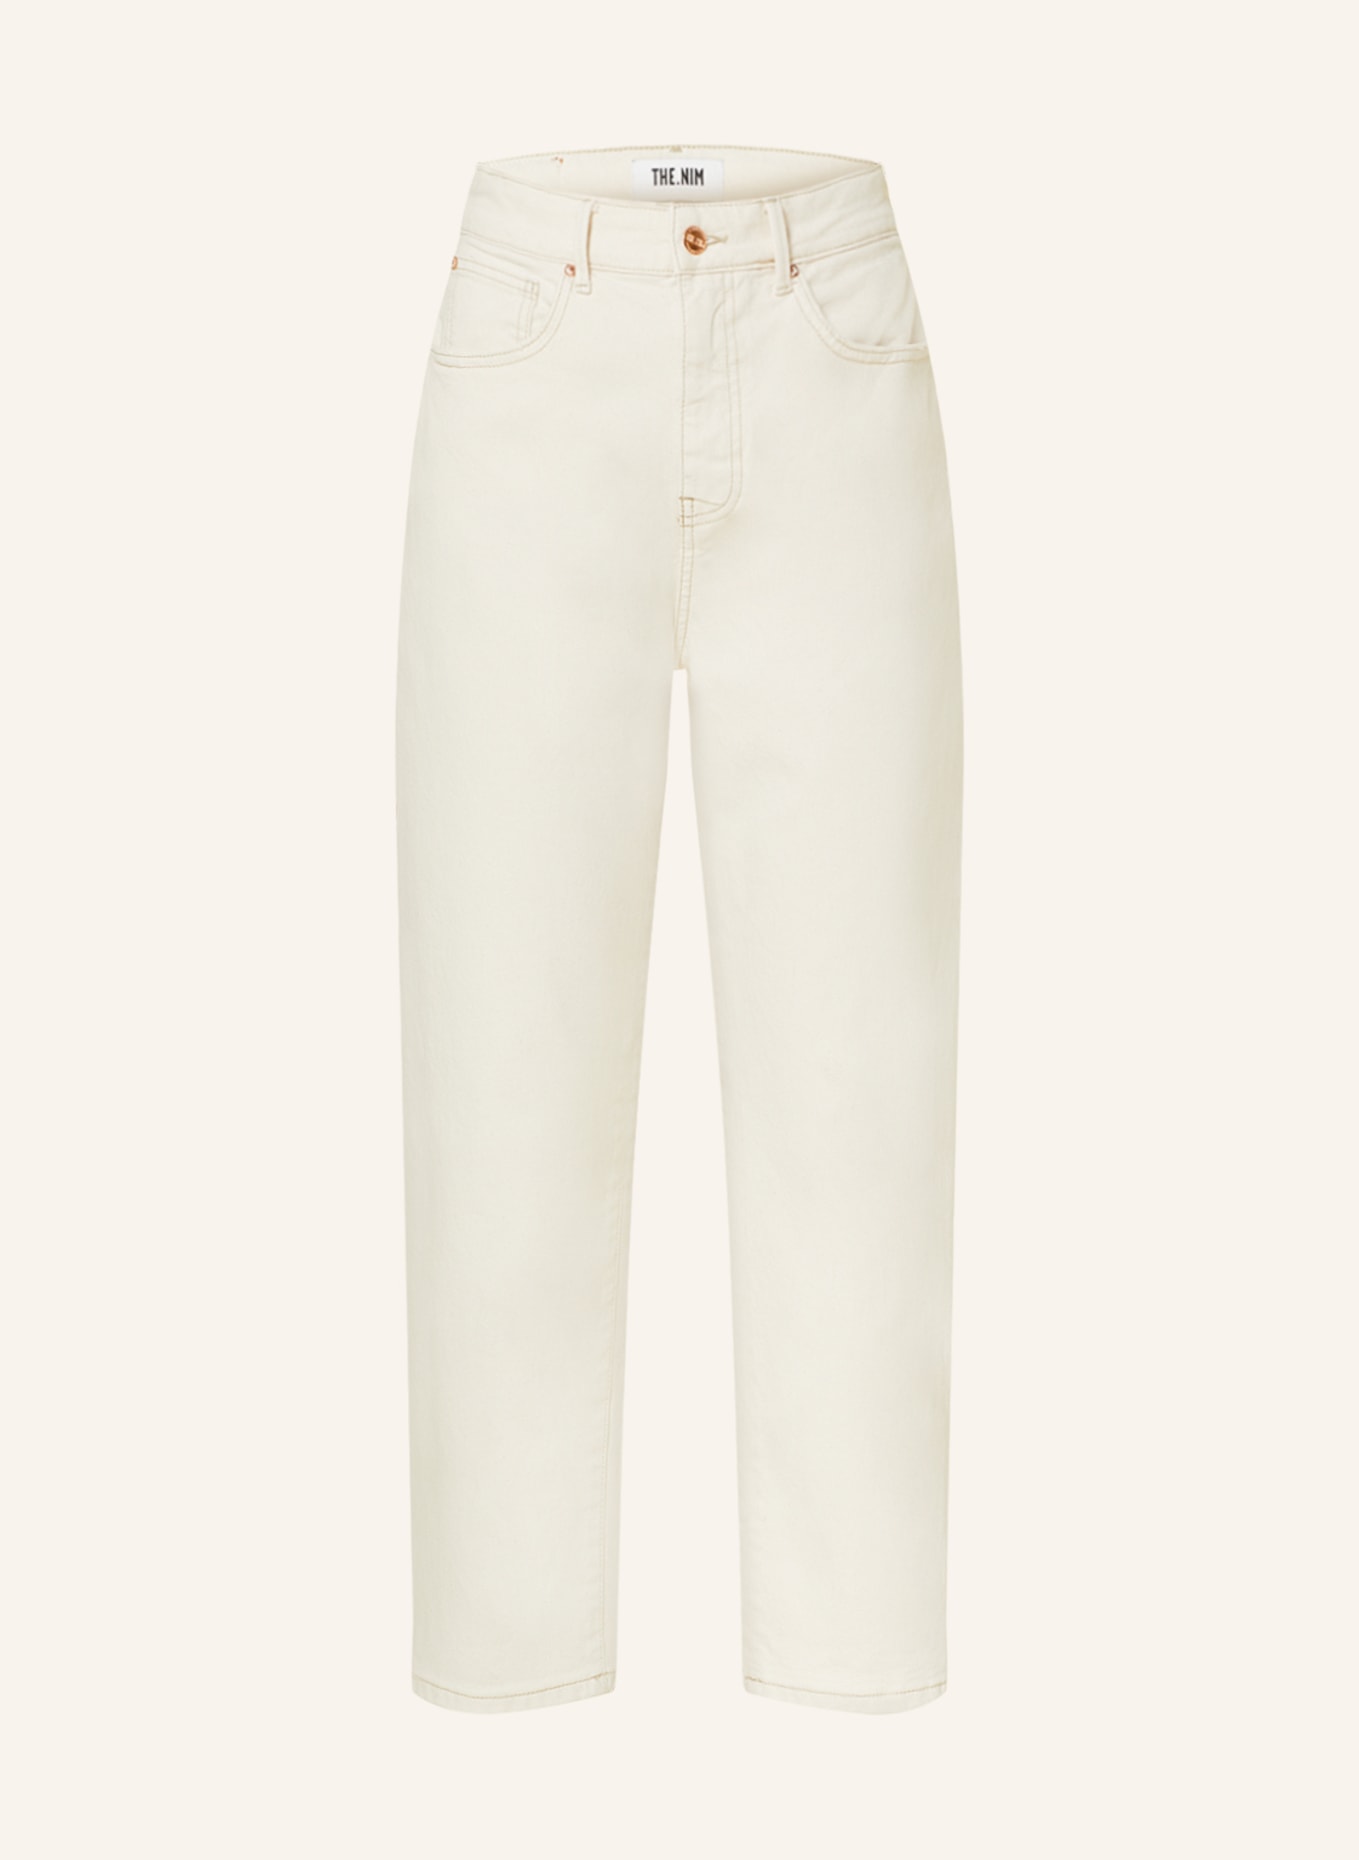 THE.NIM STANDARD Jeans COURTNEY, Color: W772-EKR ECRU (Image 1)